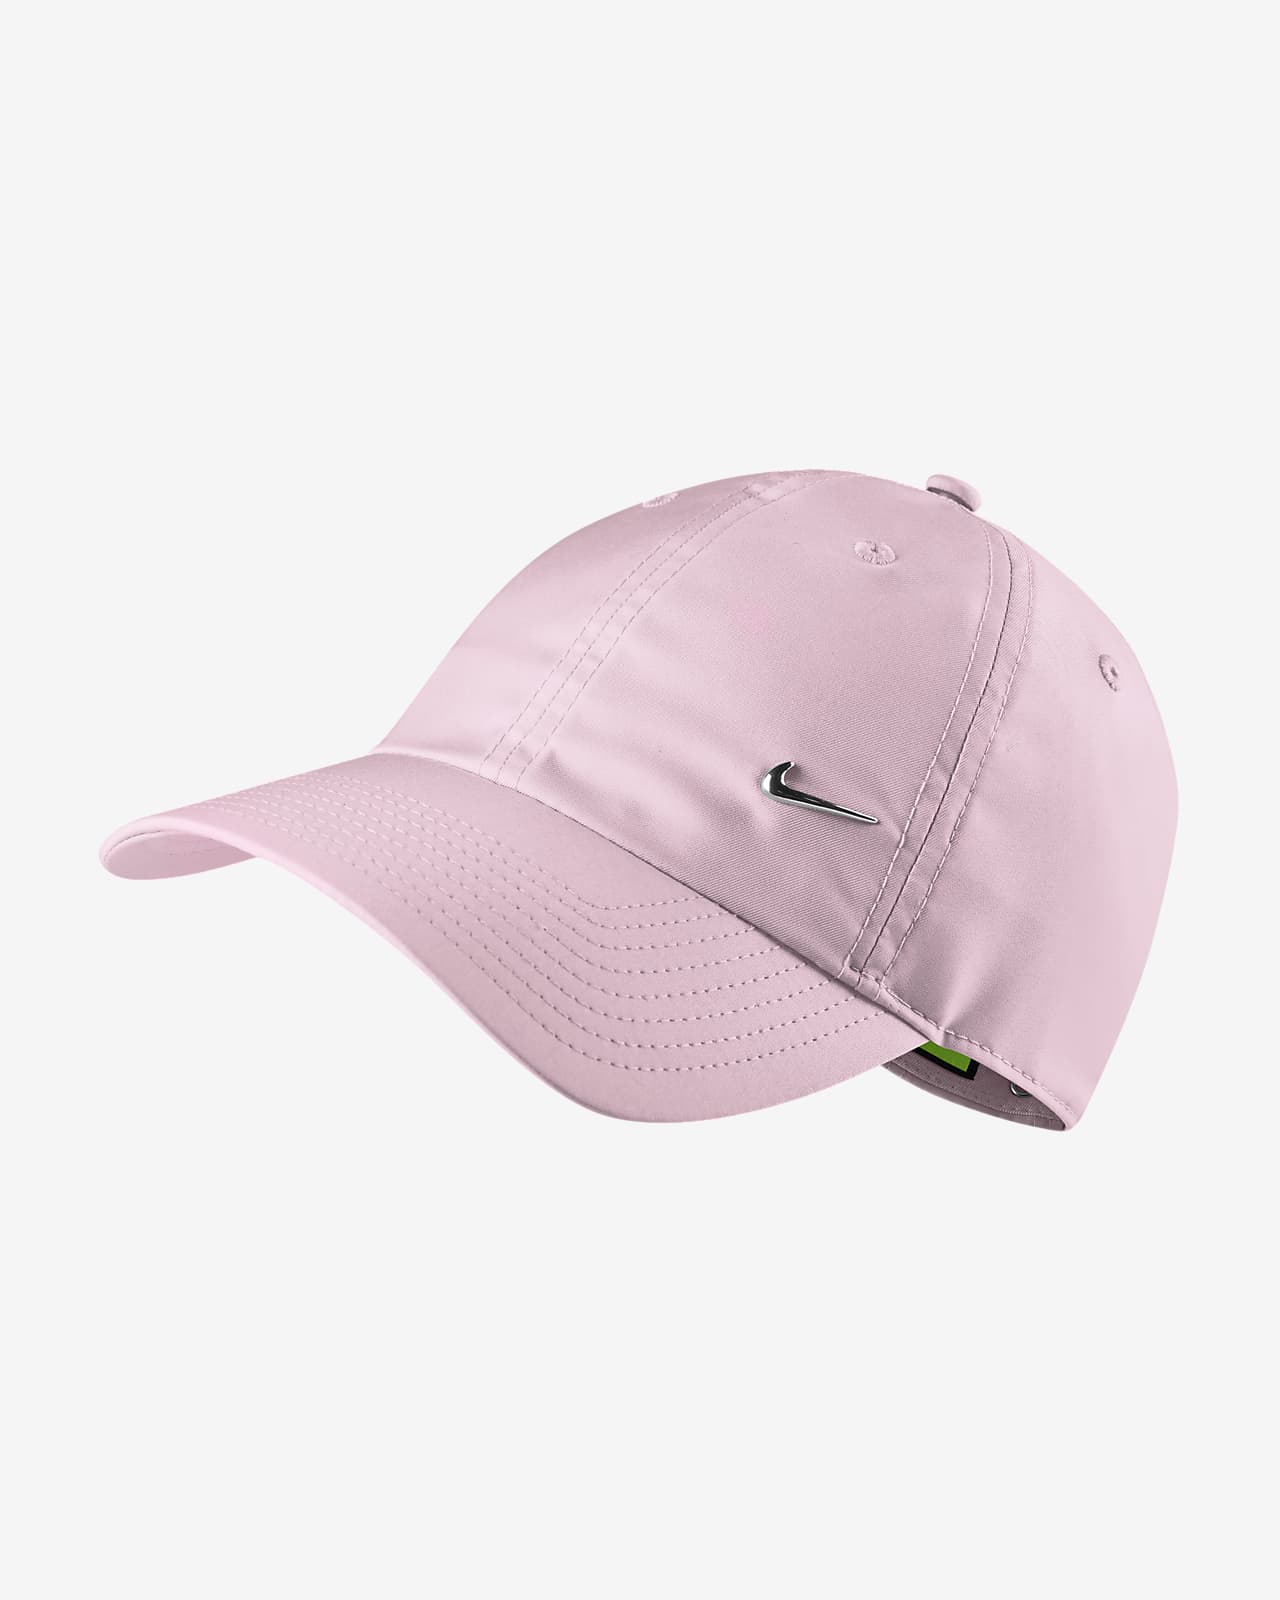 pink nike baseball cap